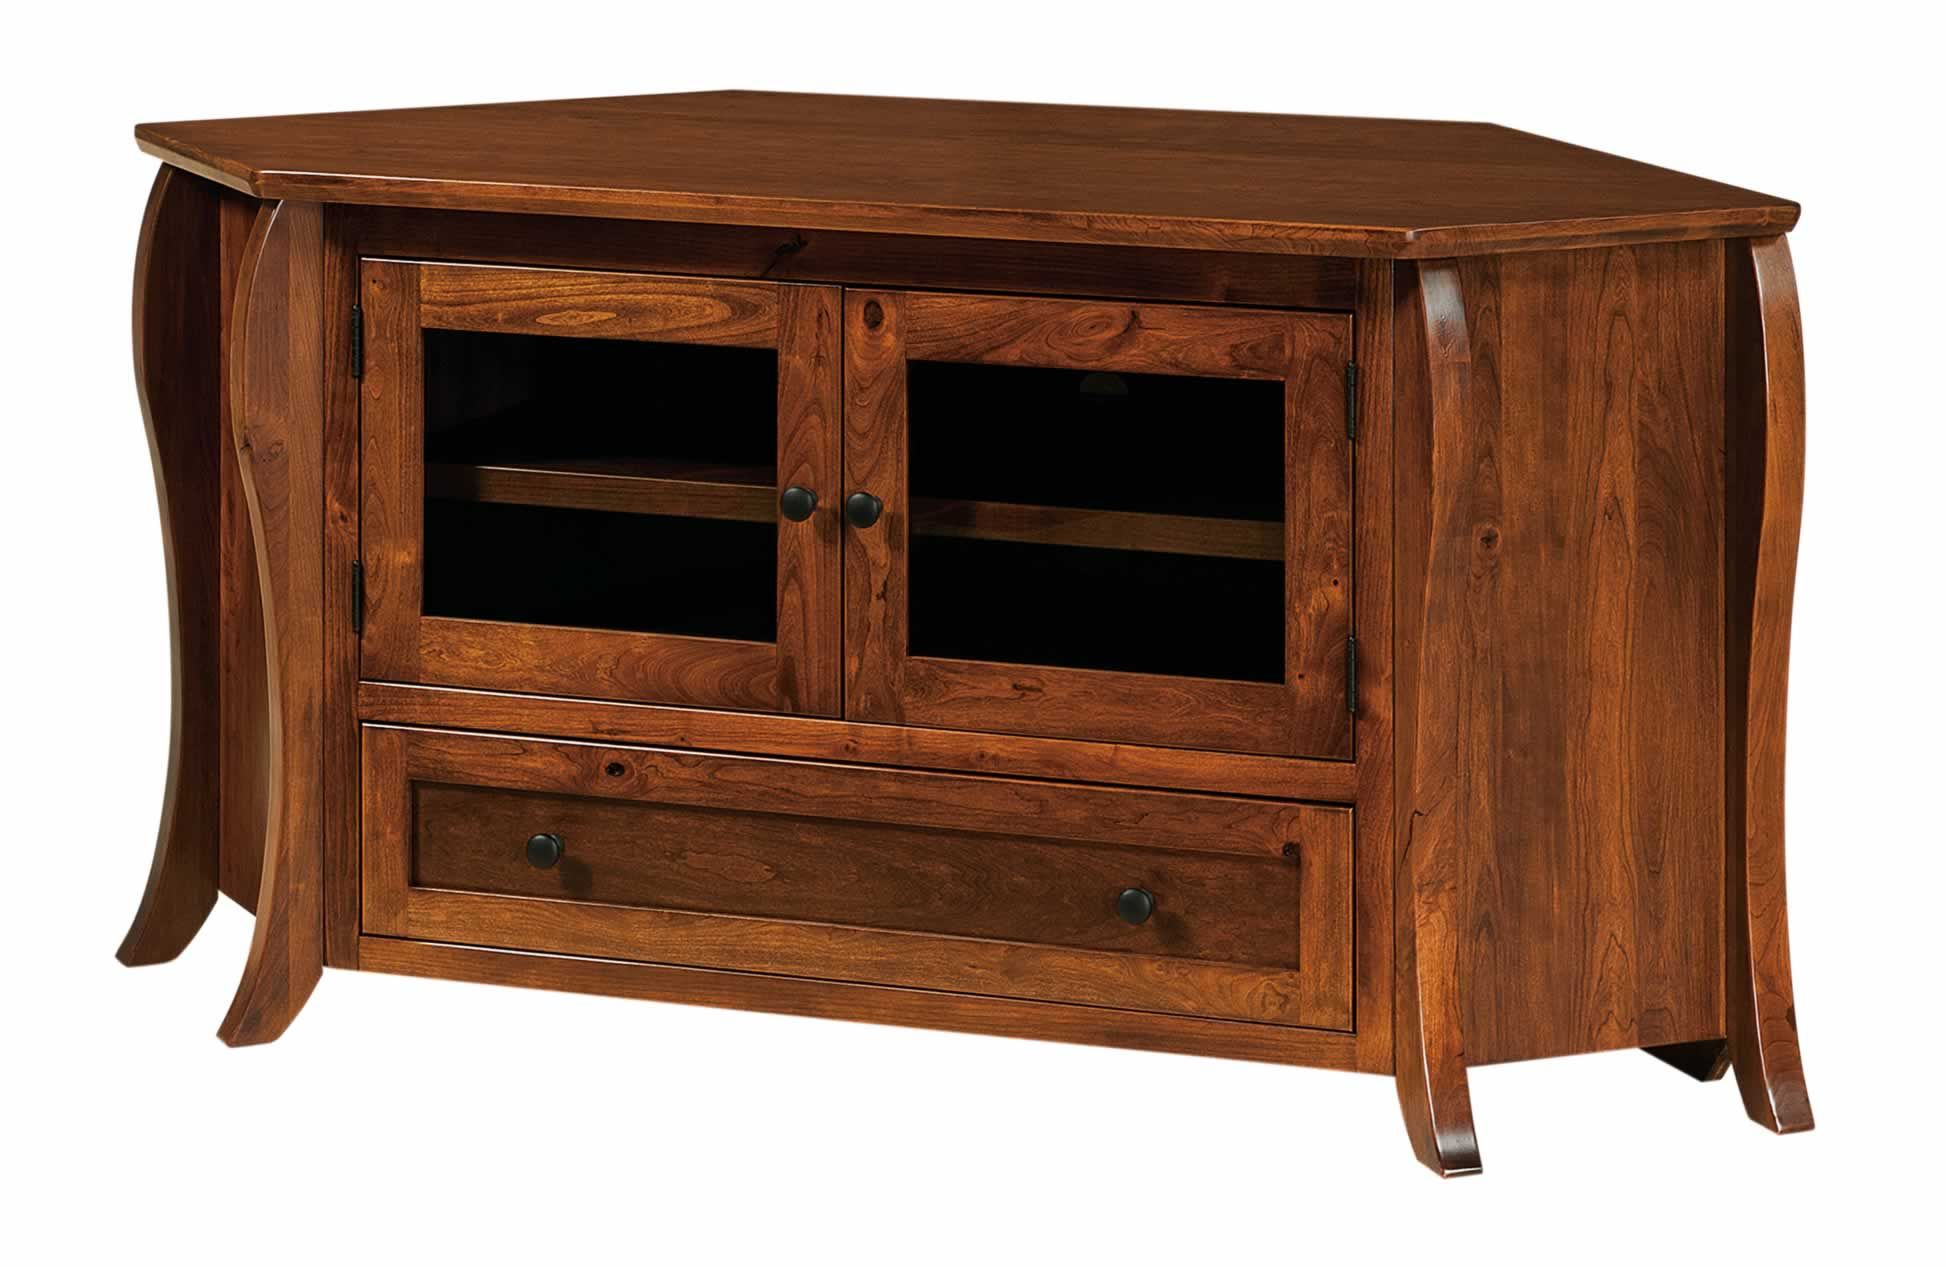 Flat Screen Tv Corner Cabinet – Heartland Amish Furniture With Corner Tv Cabinets For Flat Screens (View 4 of 15)